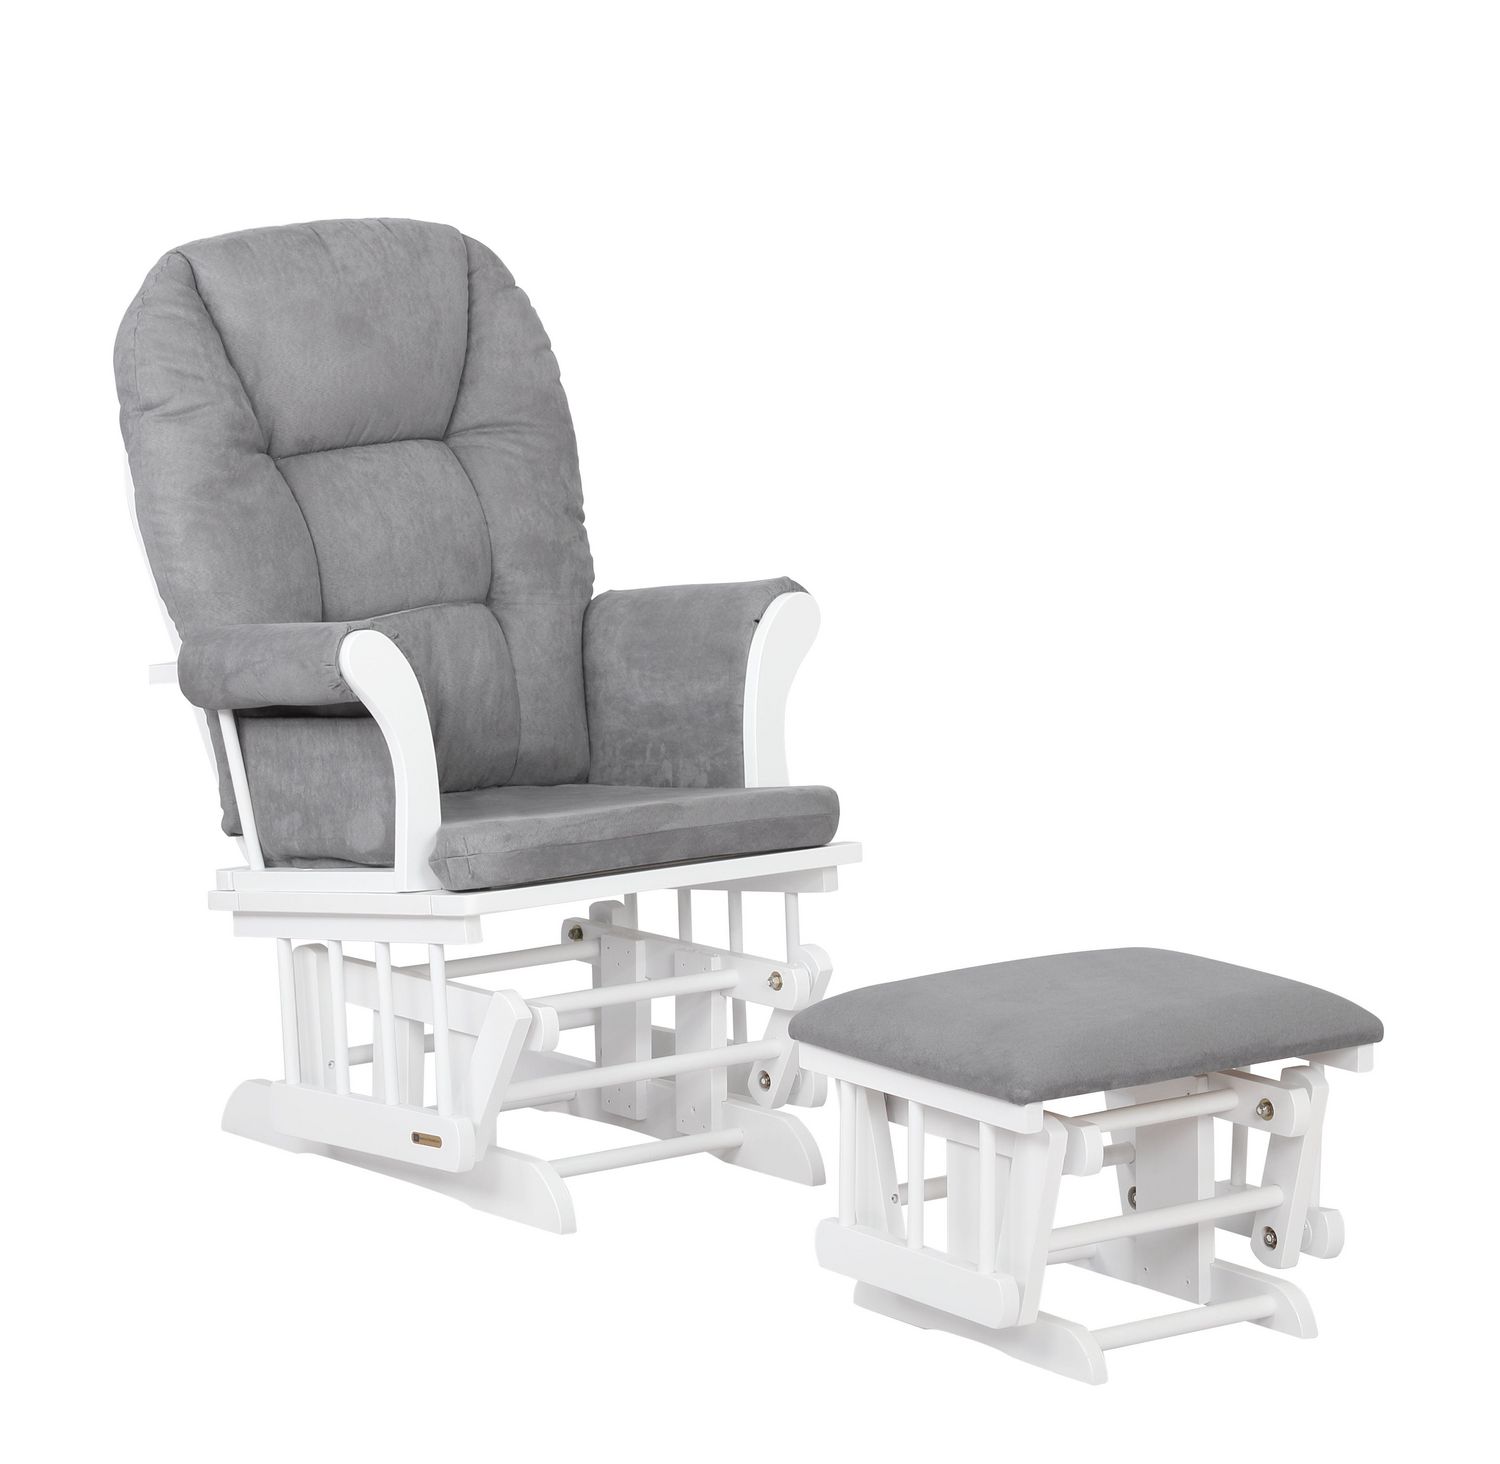 Lennox - Jordan Glider Rocker Chair and Ottoman Combo, White with Light